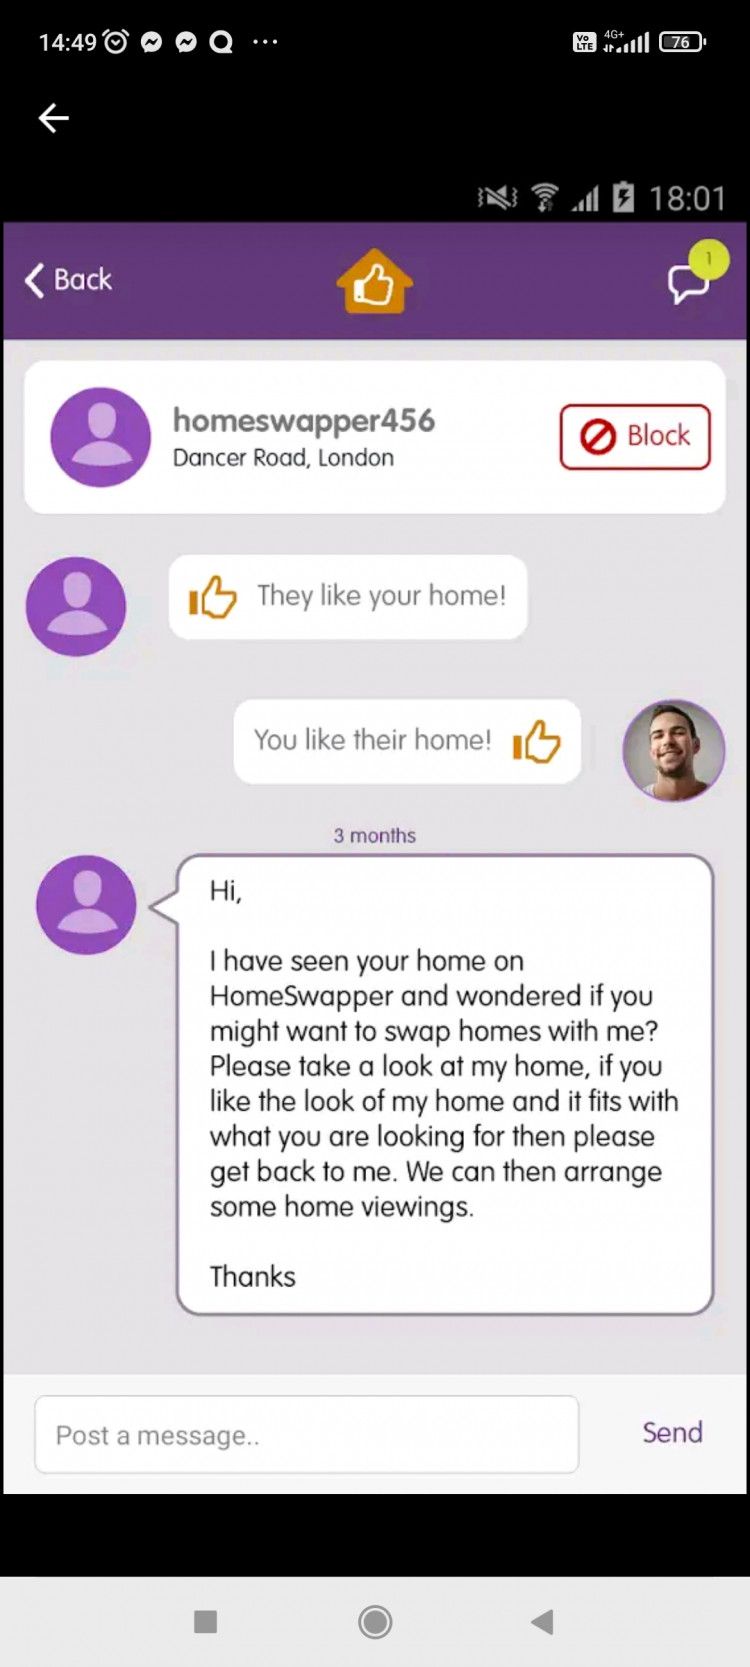 The Homeswapper app 